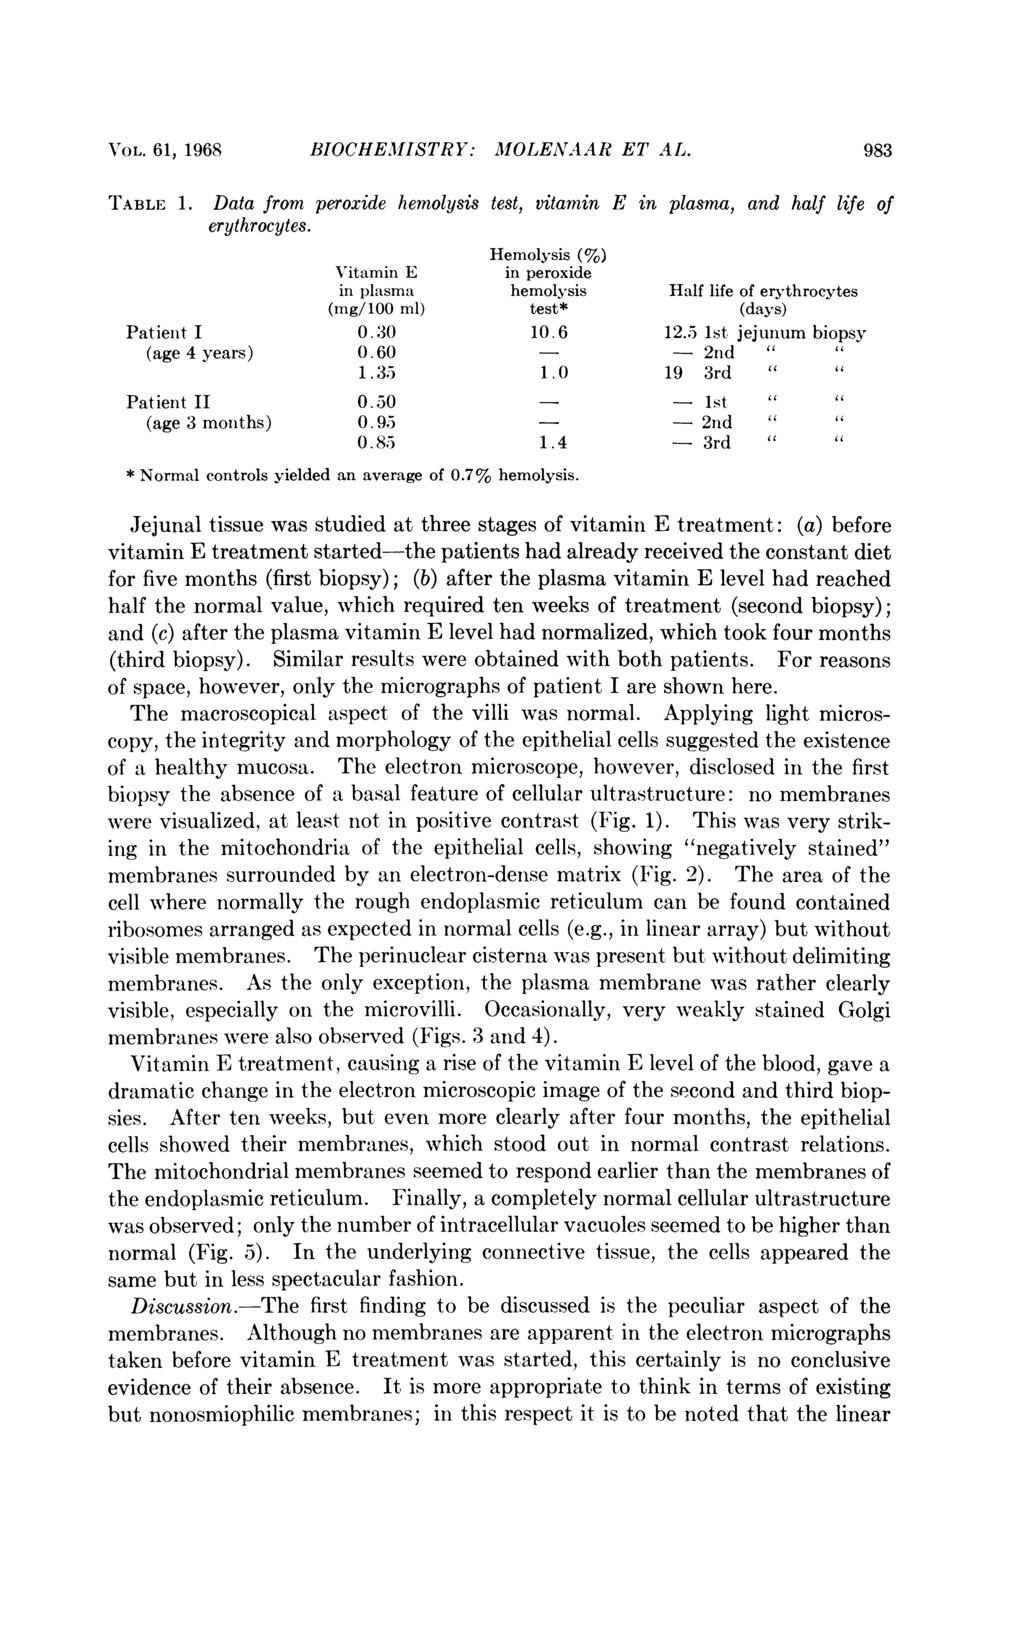 VgOL. 6 1, 1968 BIOCHEMISTRY: MOLENAAR ET AL. 983 TABLE 1. Data from peroxide hemolysis test, vitamin E in plasma, and half life of erythrocytes.